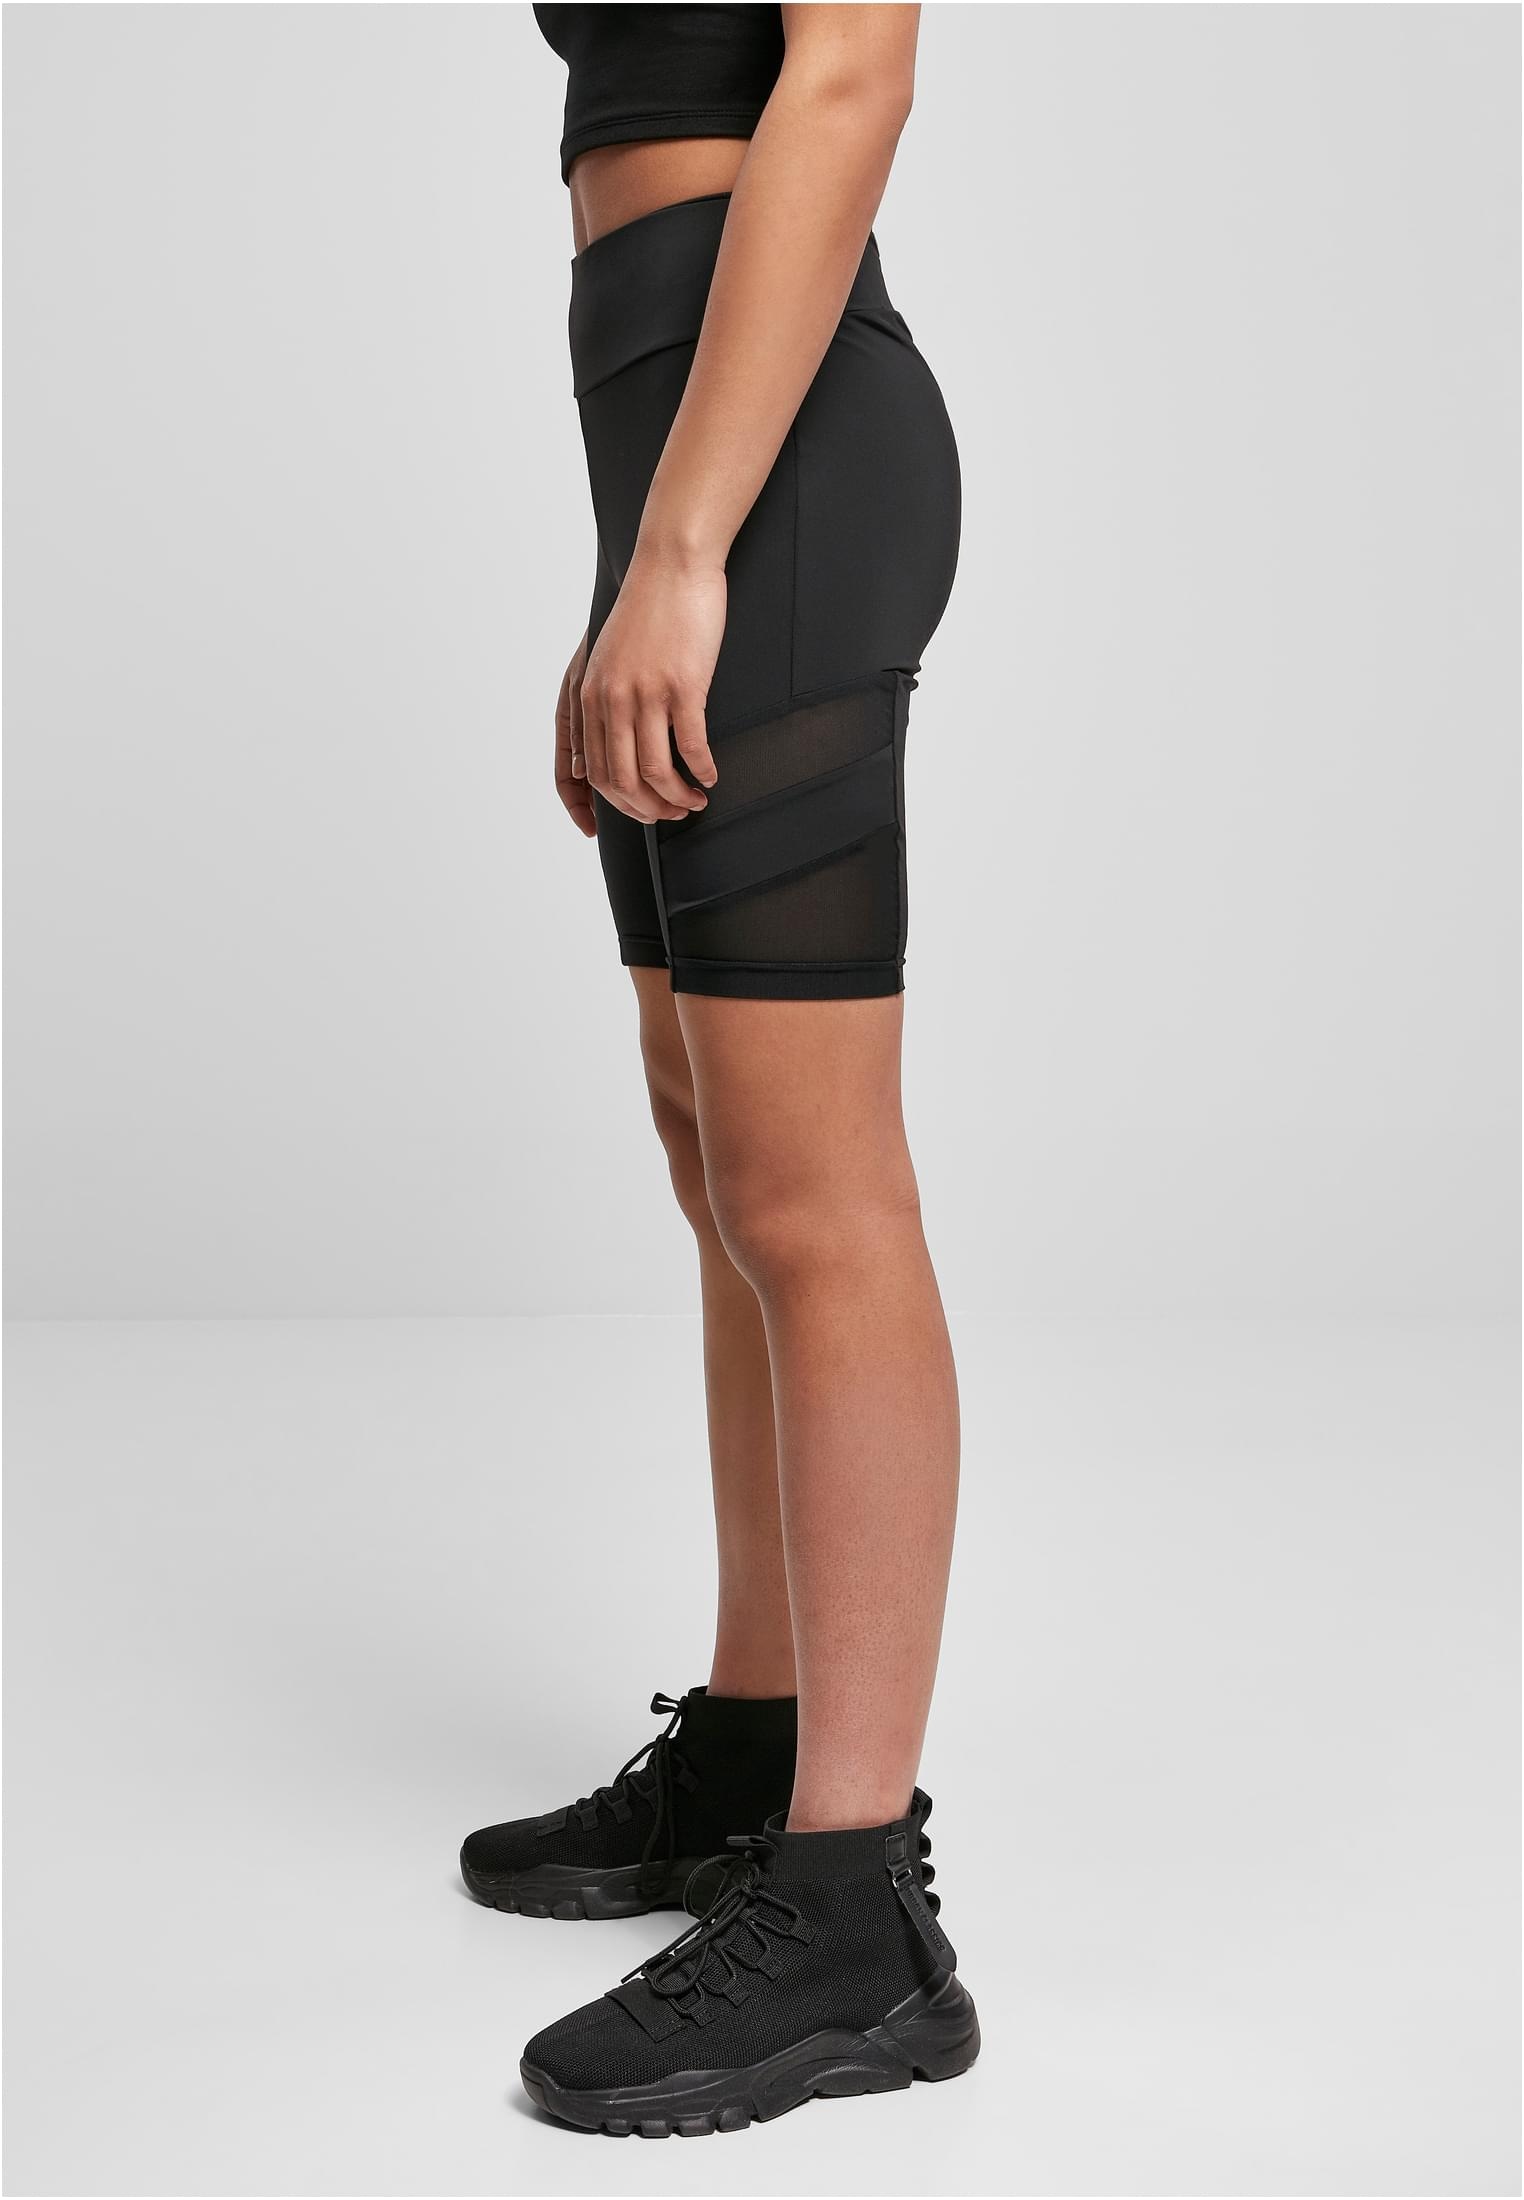 »Damen Mesh | I\'m Cycle Ladies Stoffhose kaufen (1 High CLASSICS Shorts«, Tech online URBAN tlg.) walking Waist